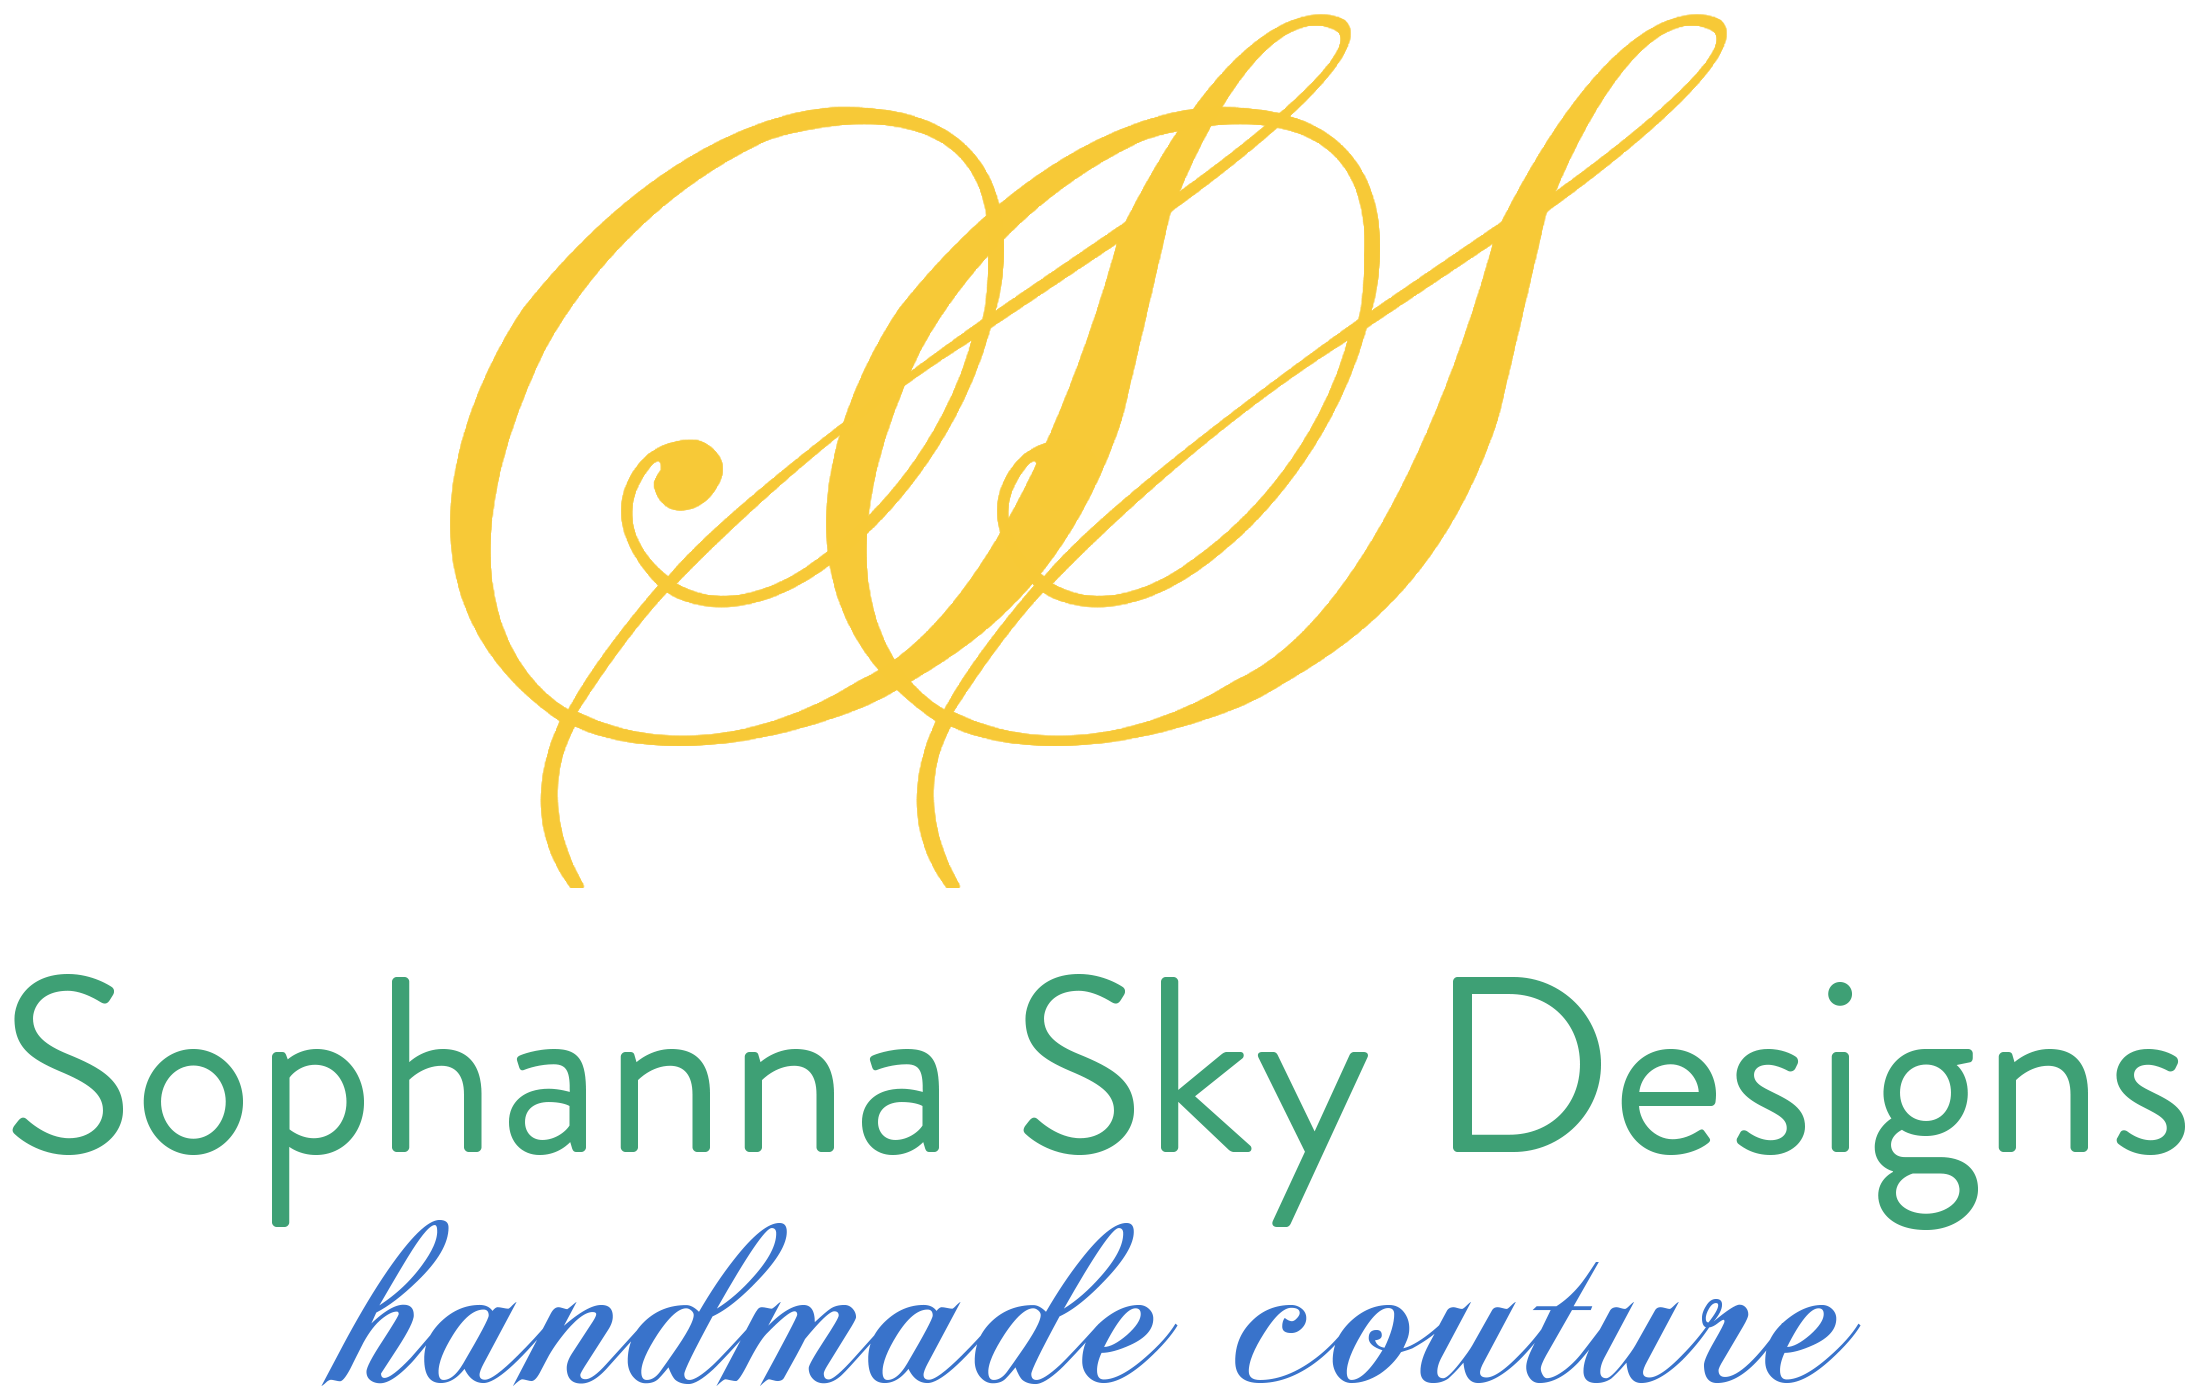 Sophanna Sky Designs